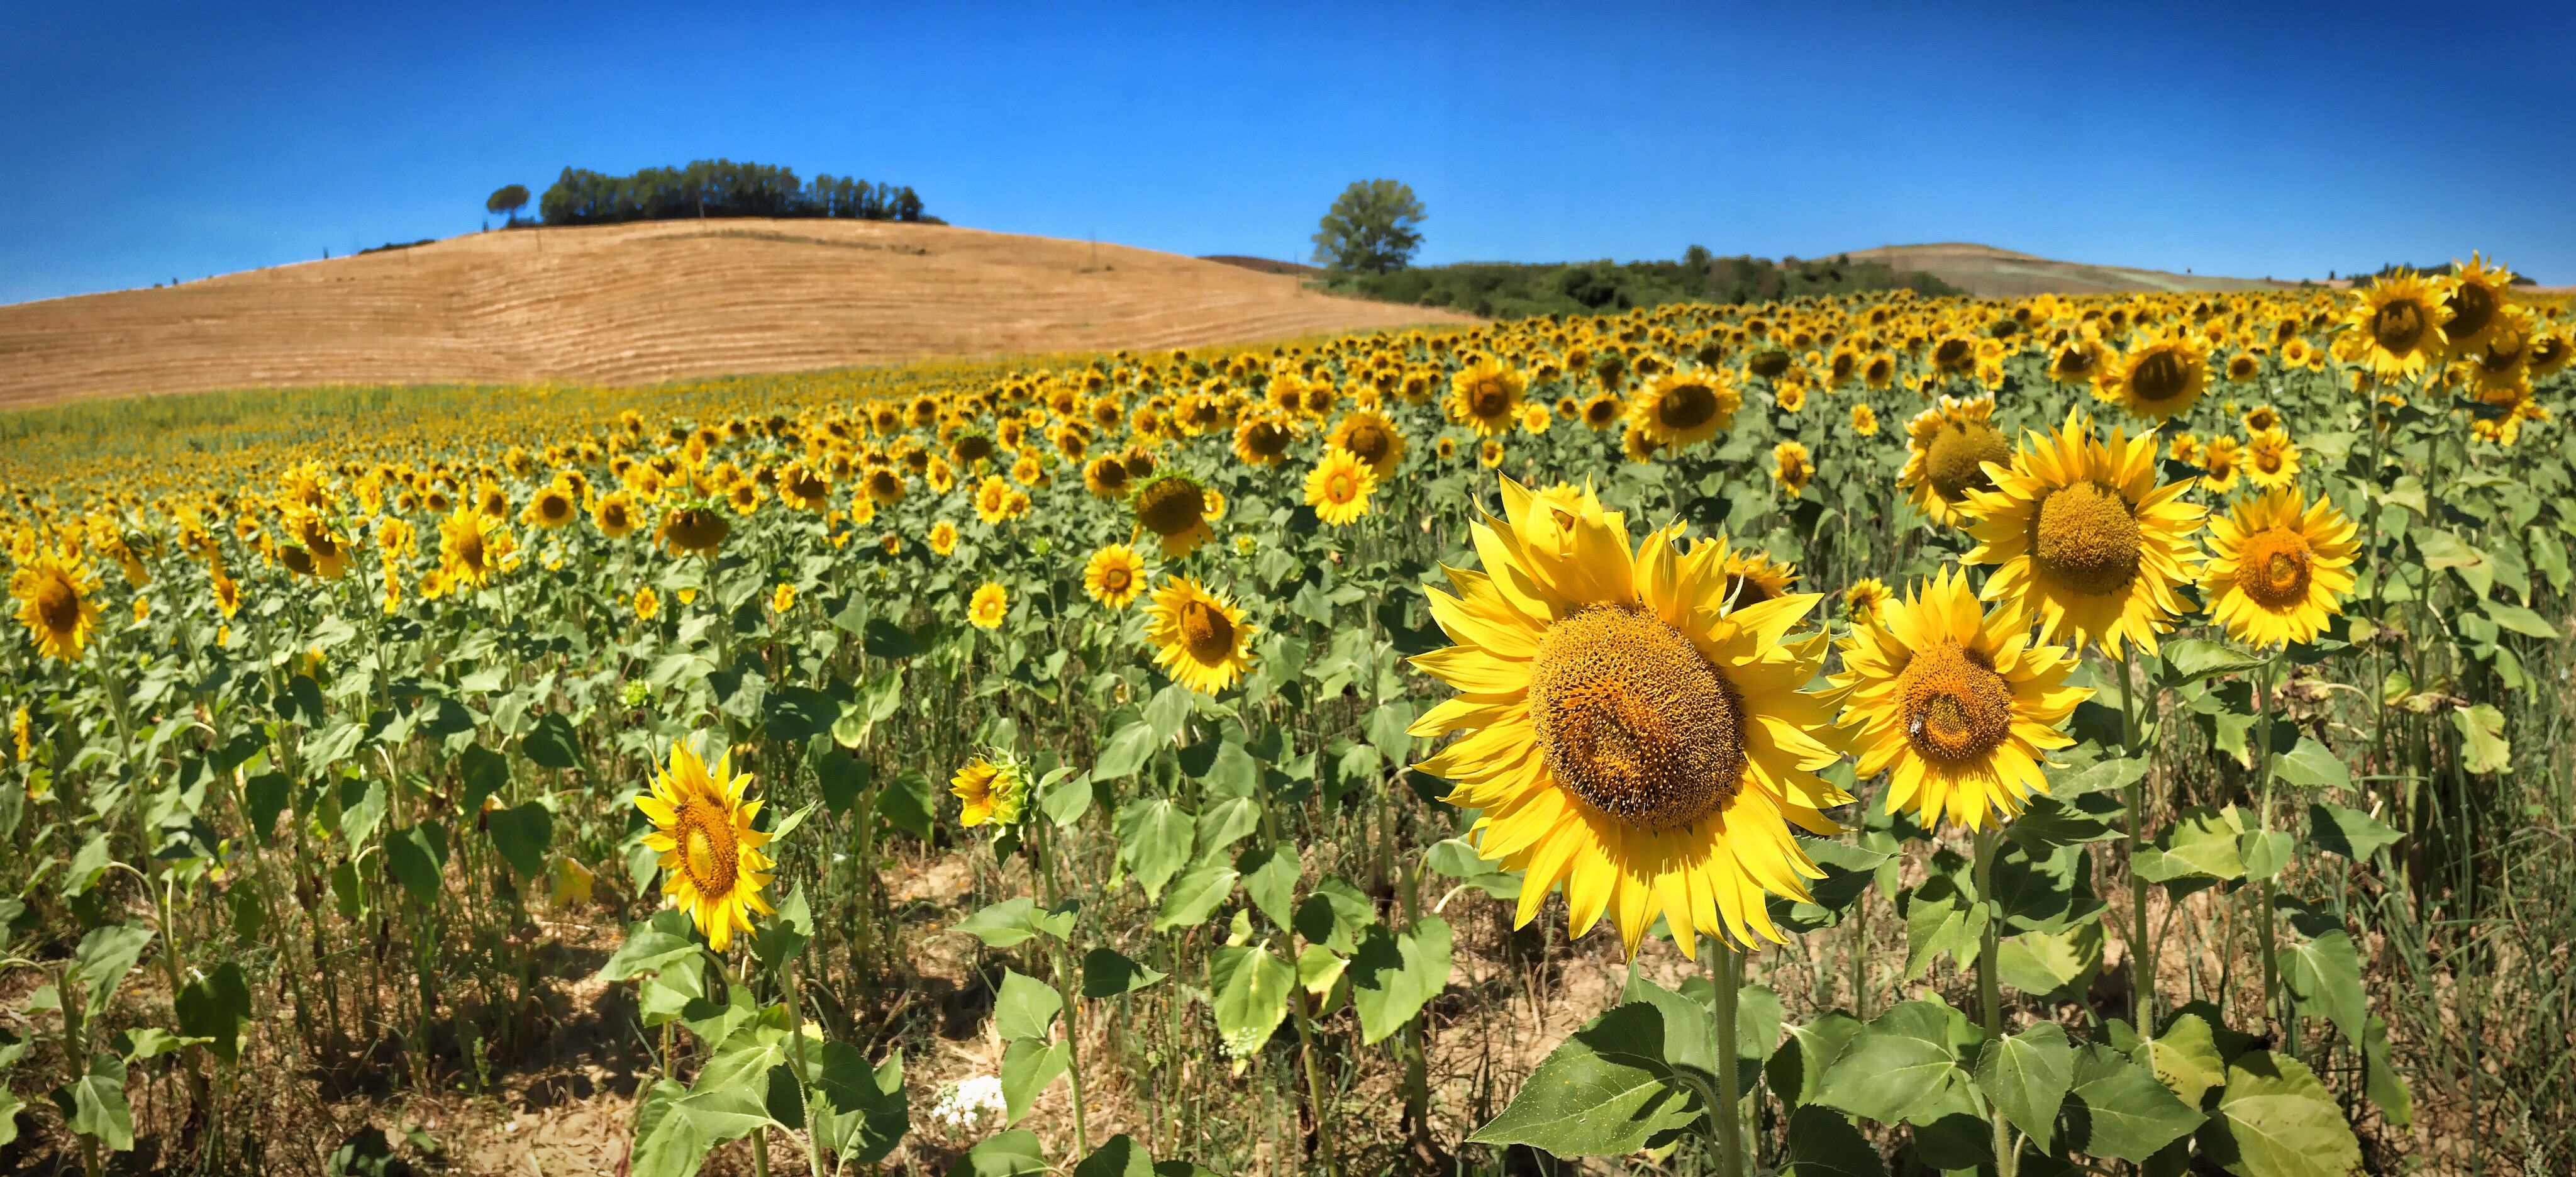 Day 279.2 – Tuscan sunflowers